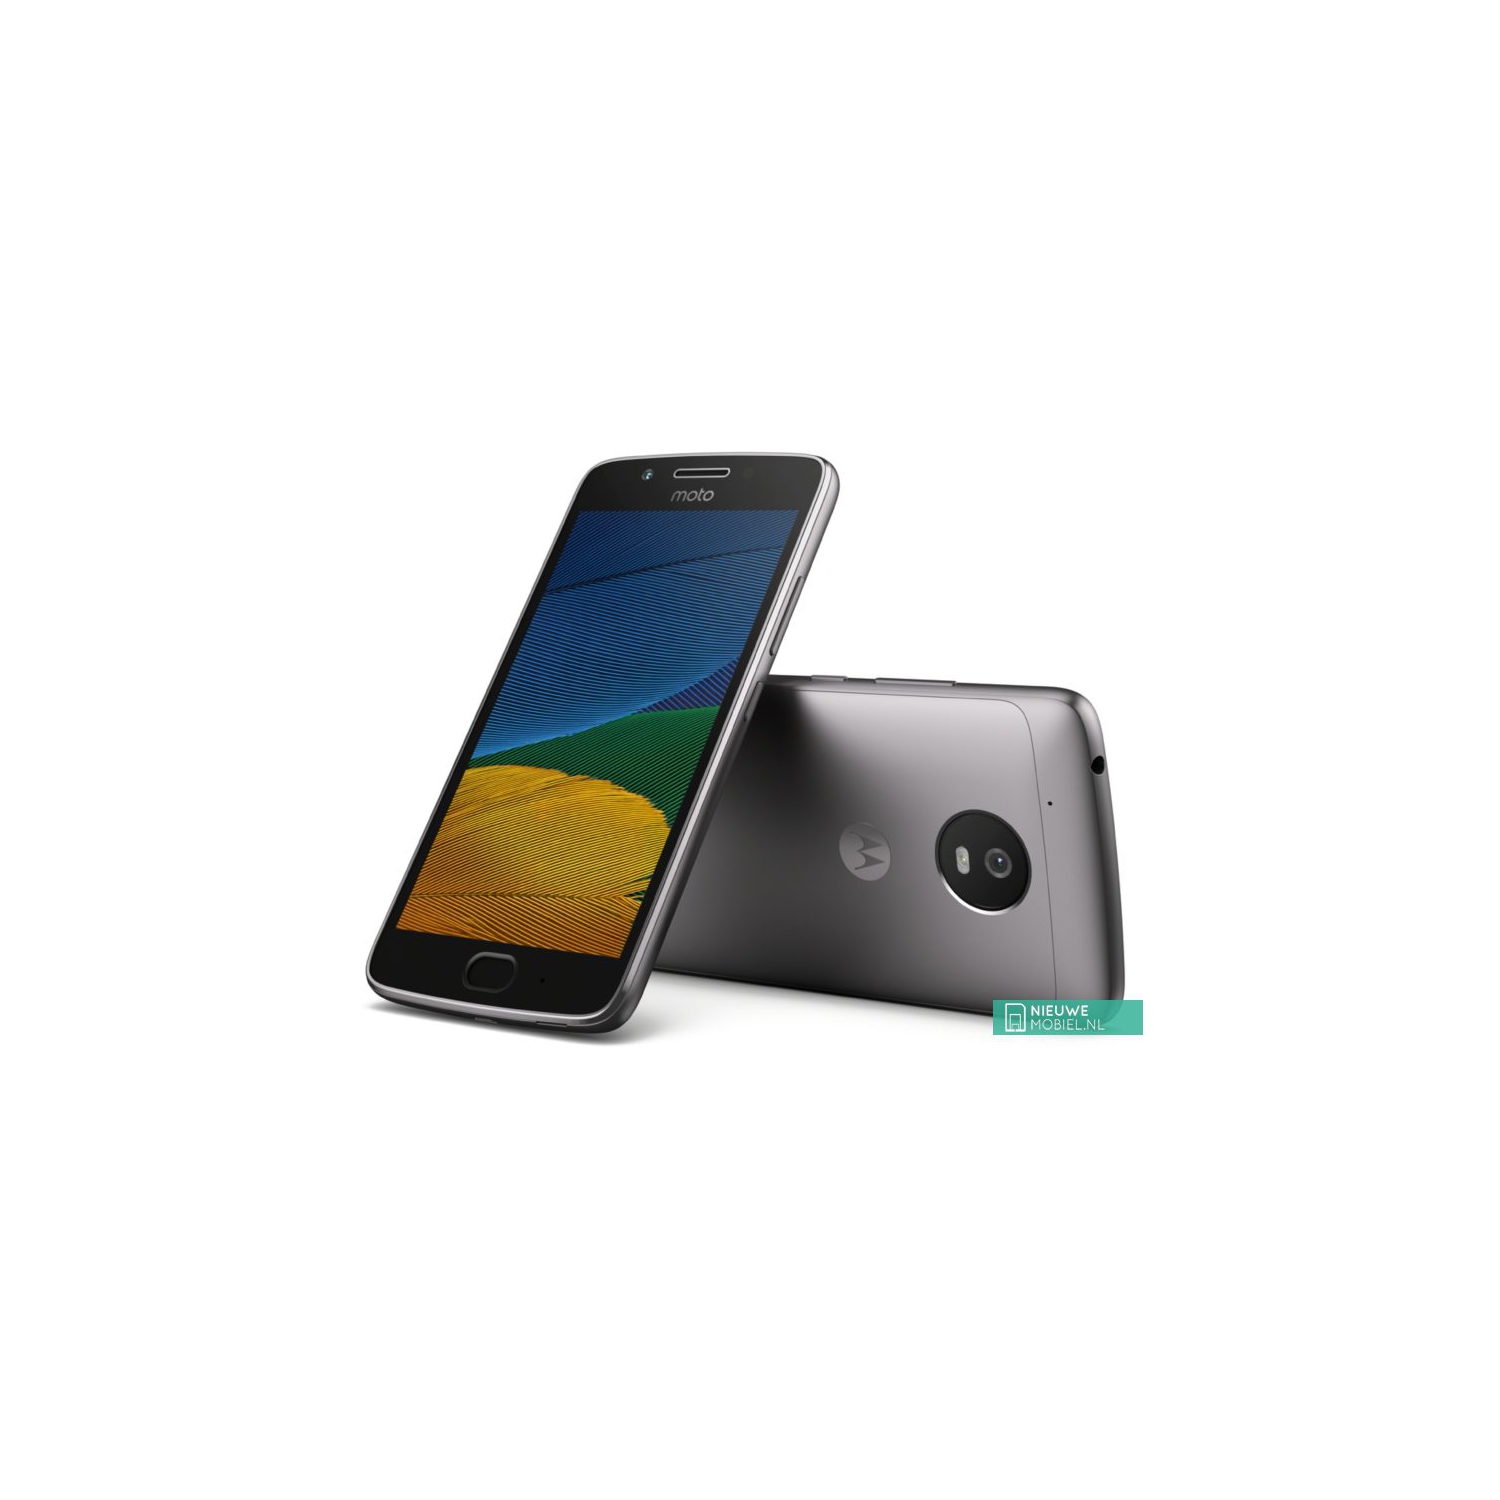 Motorola Moto G5 (XT1670) 16GB Smartphone Black Unlocked Open Box